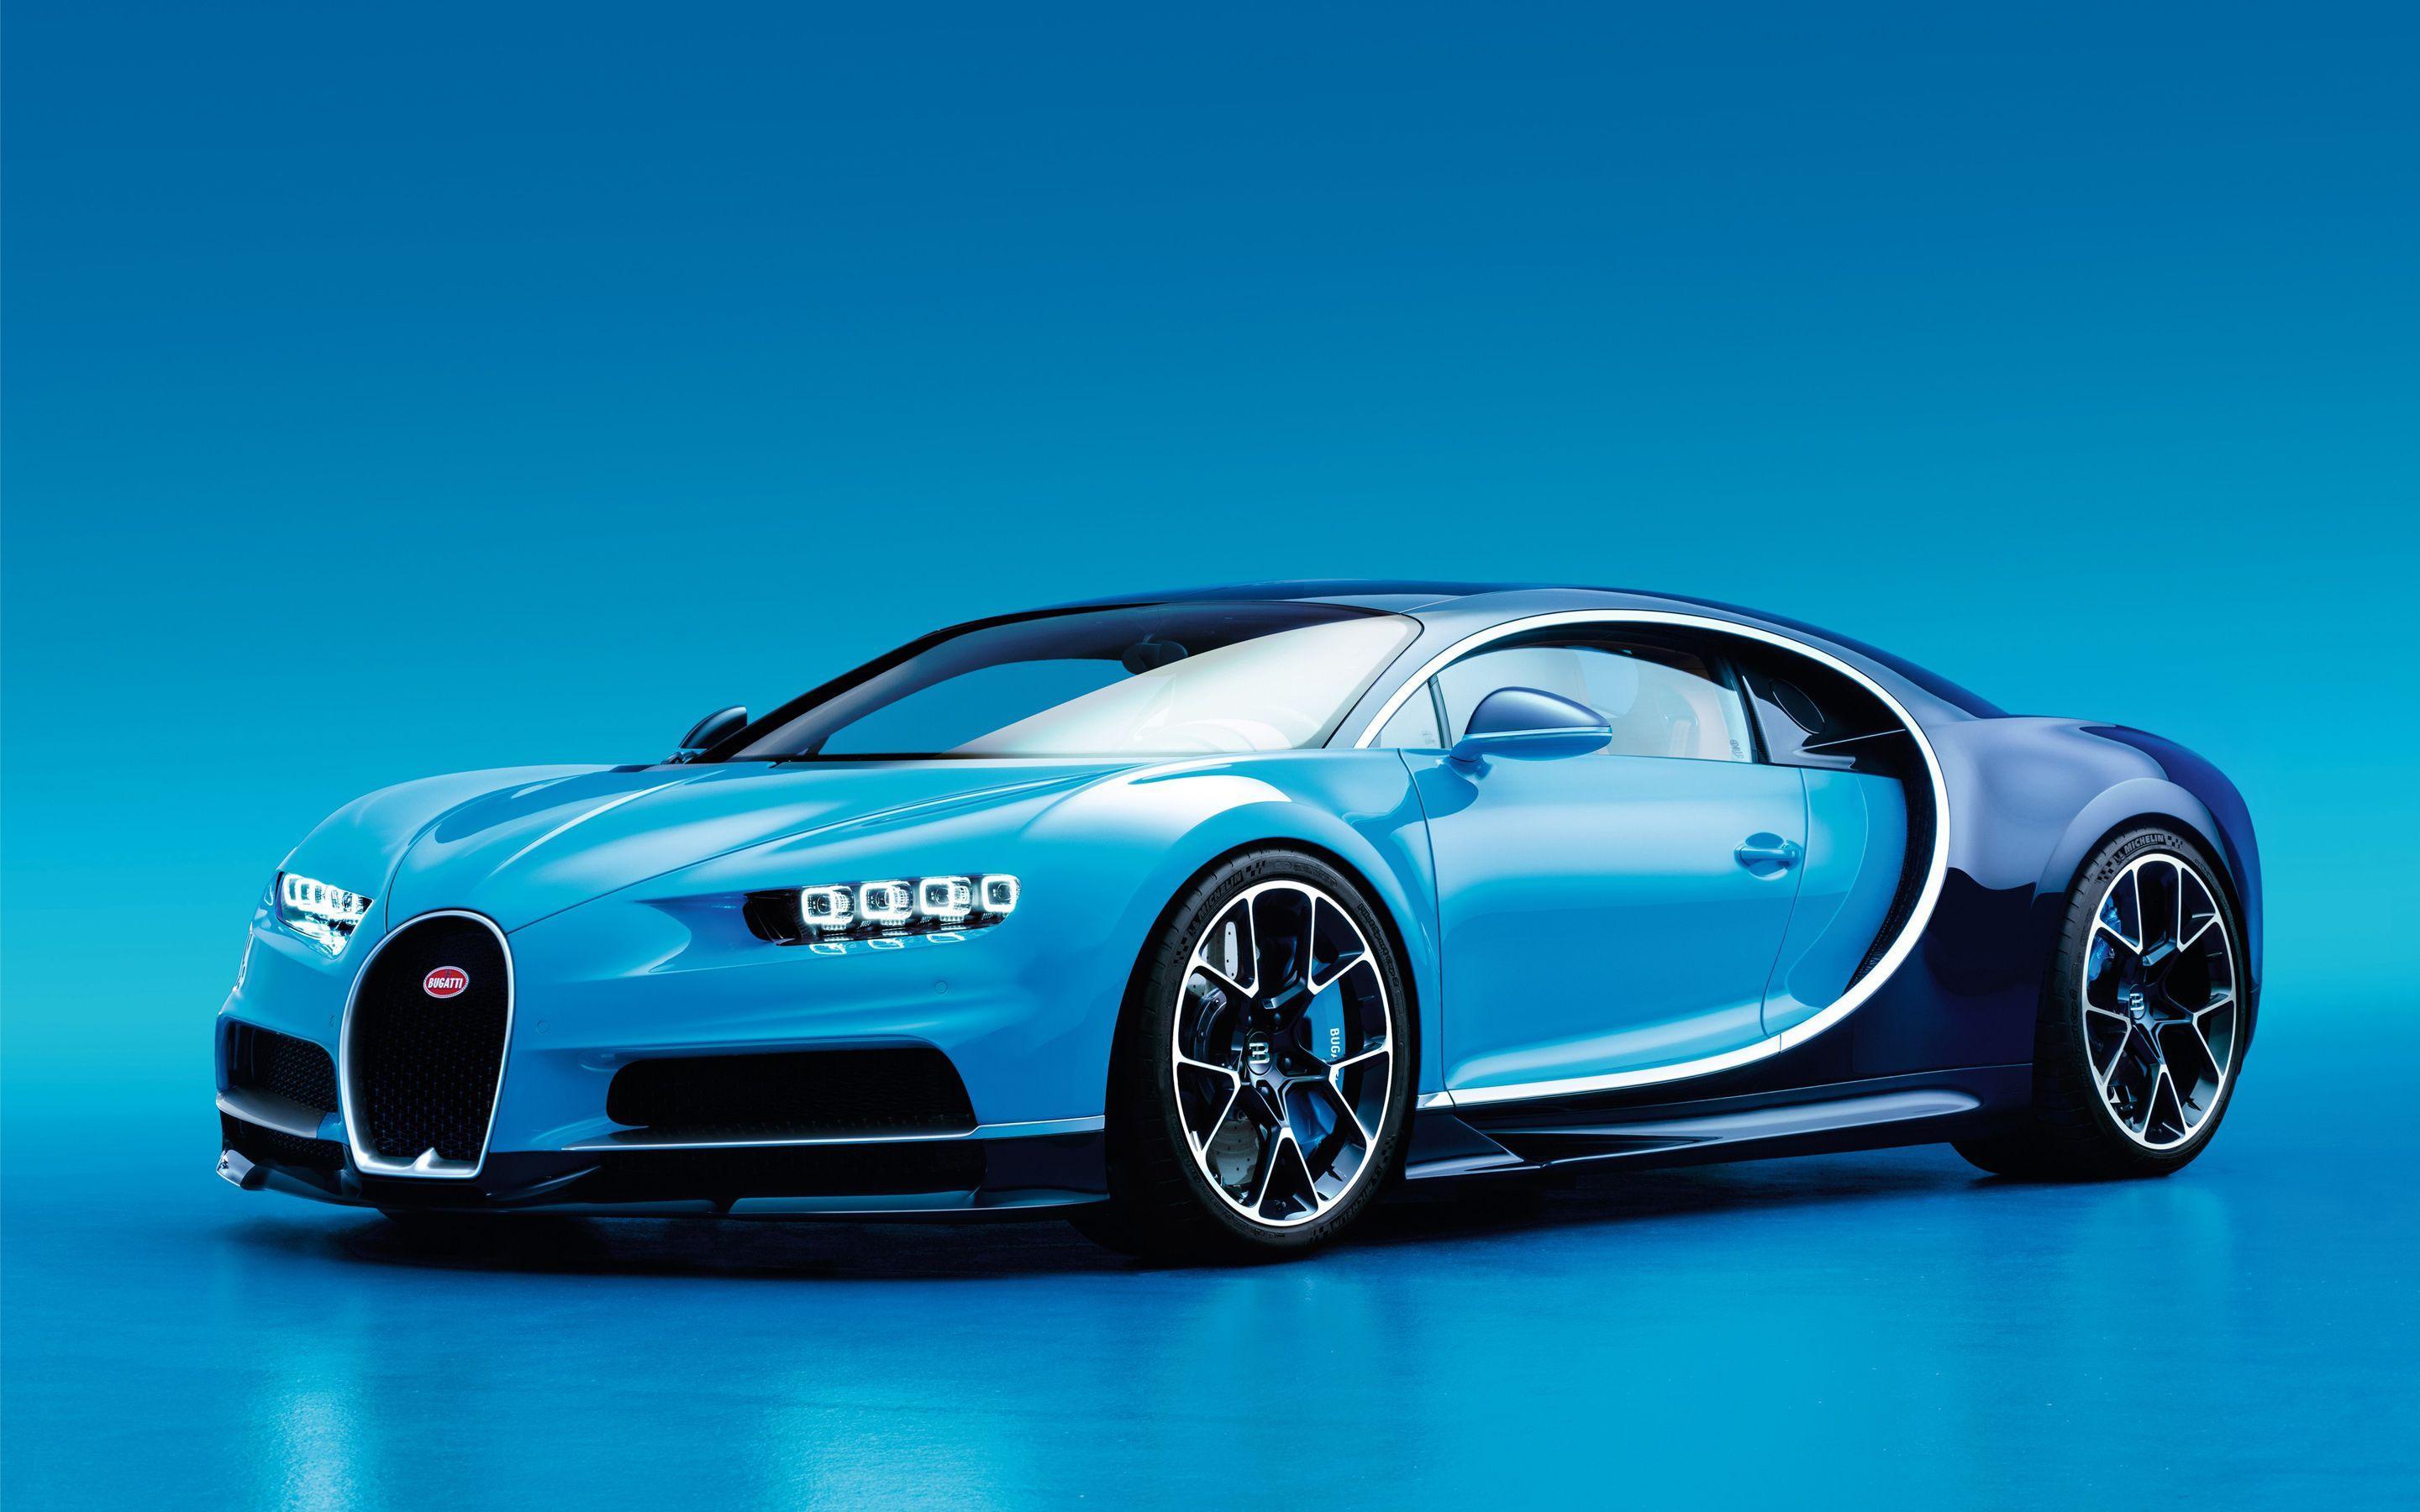 HD wallpaper: Bugatti Chiron Luxurious Super Sports Car, mode of  transportation | Wallpaper Flare